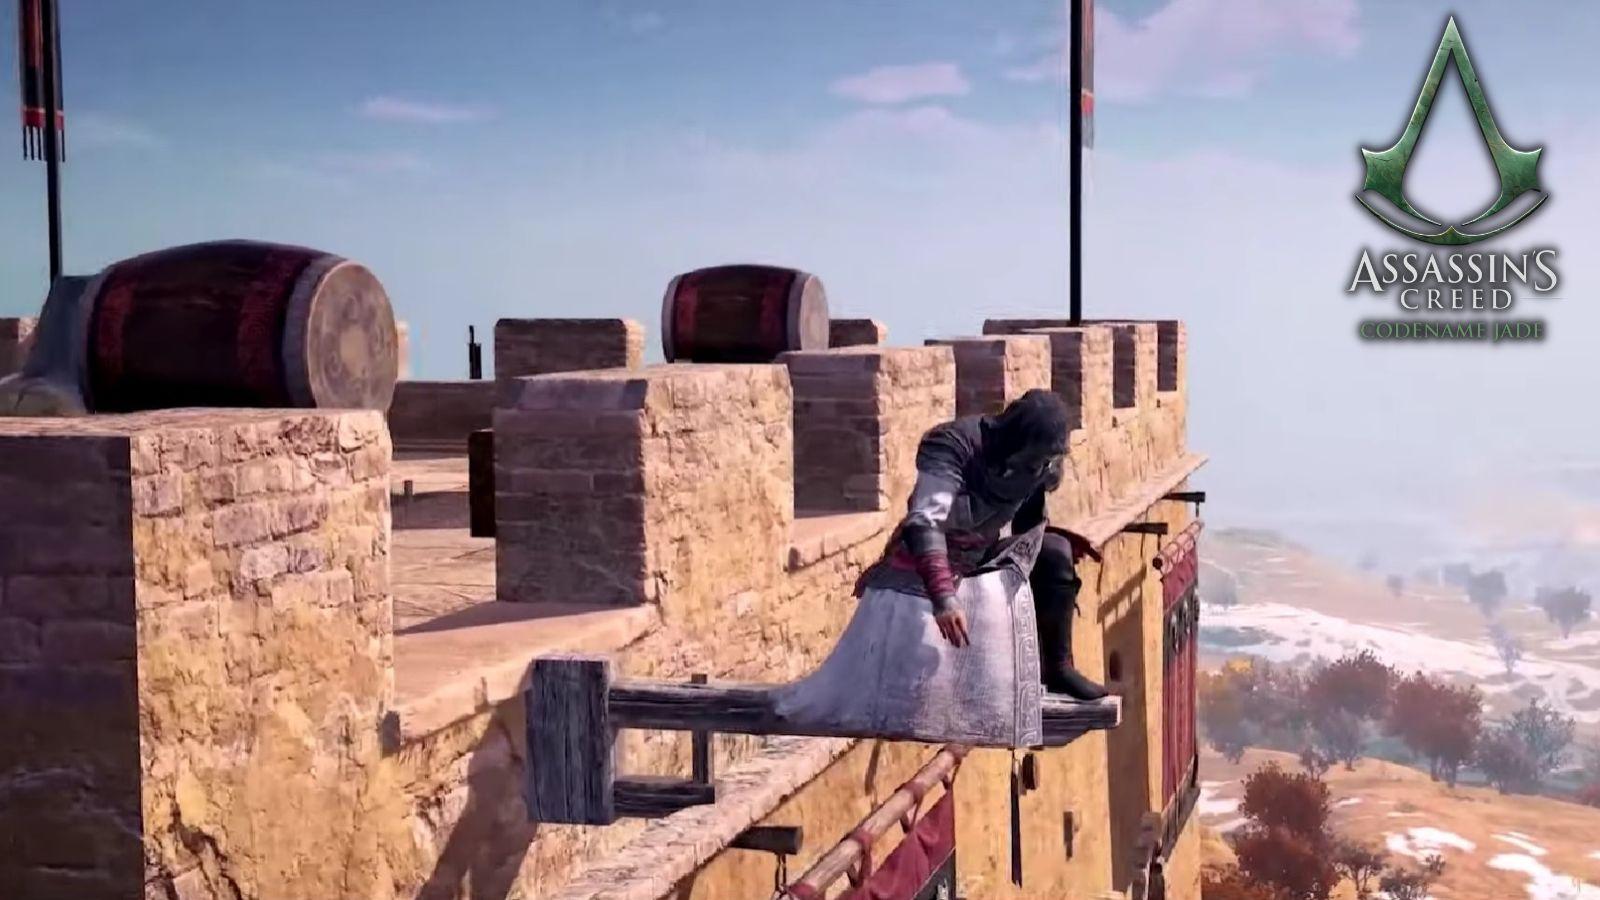 Assassin's Creed Codename Jade character on ledge